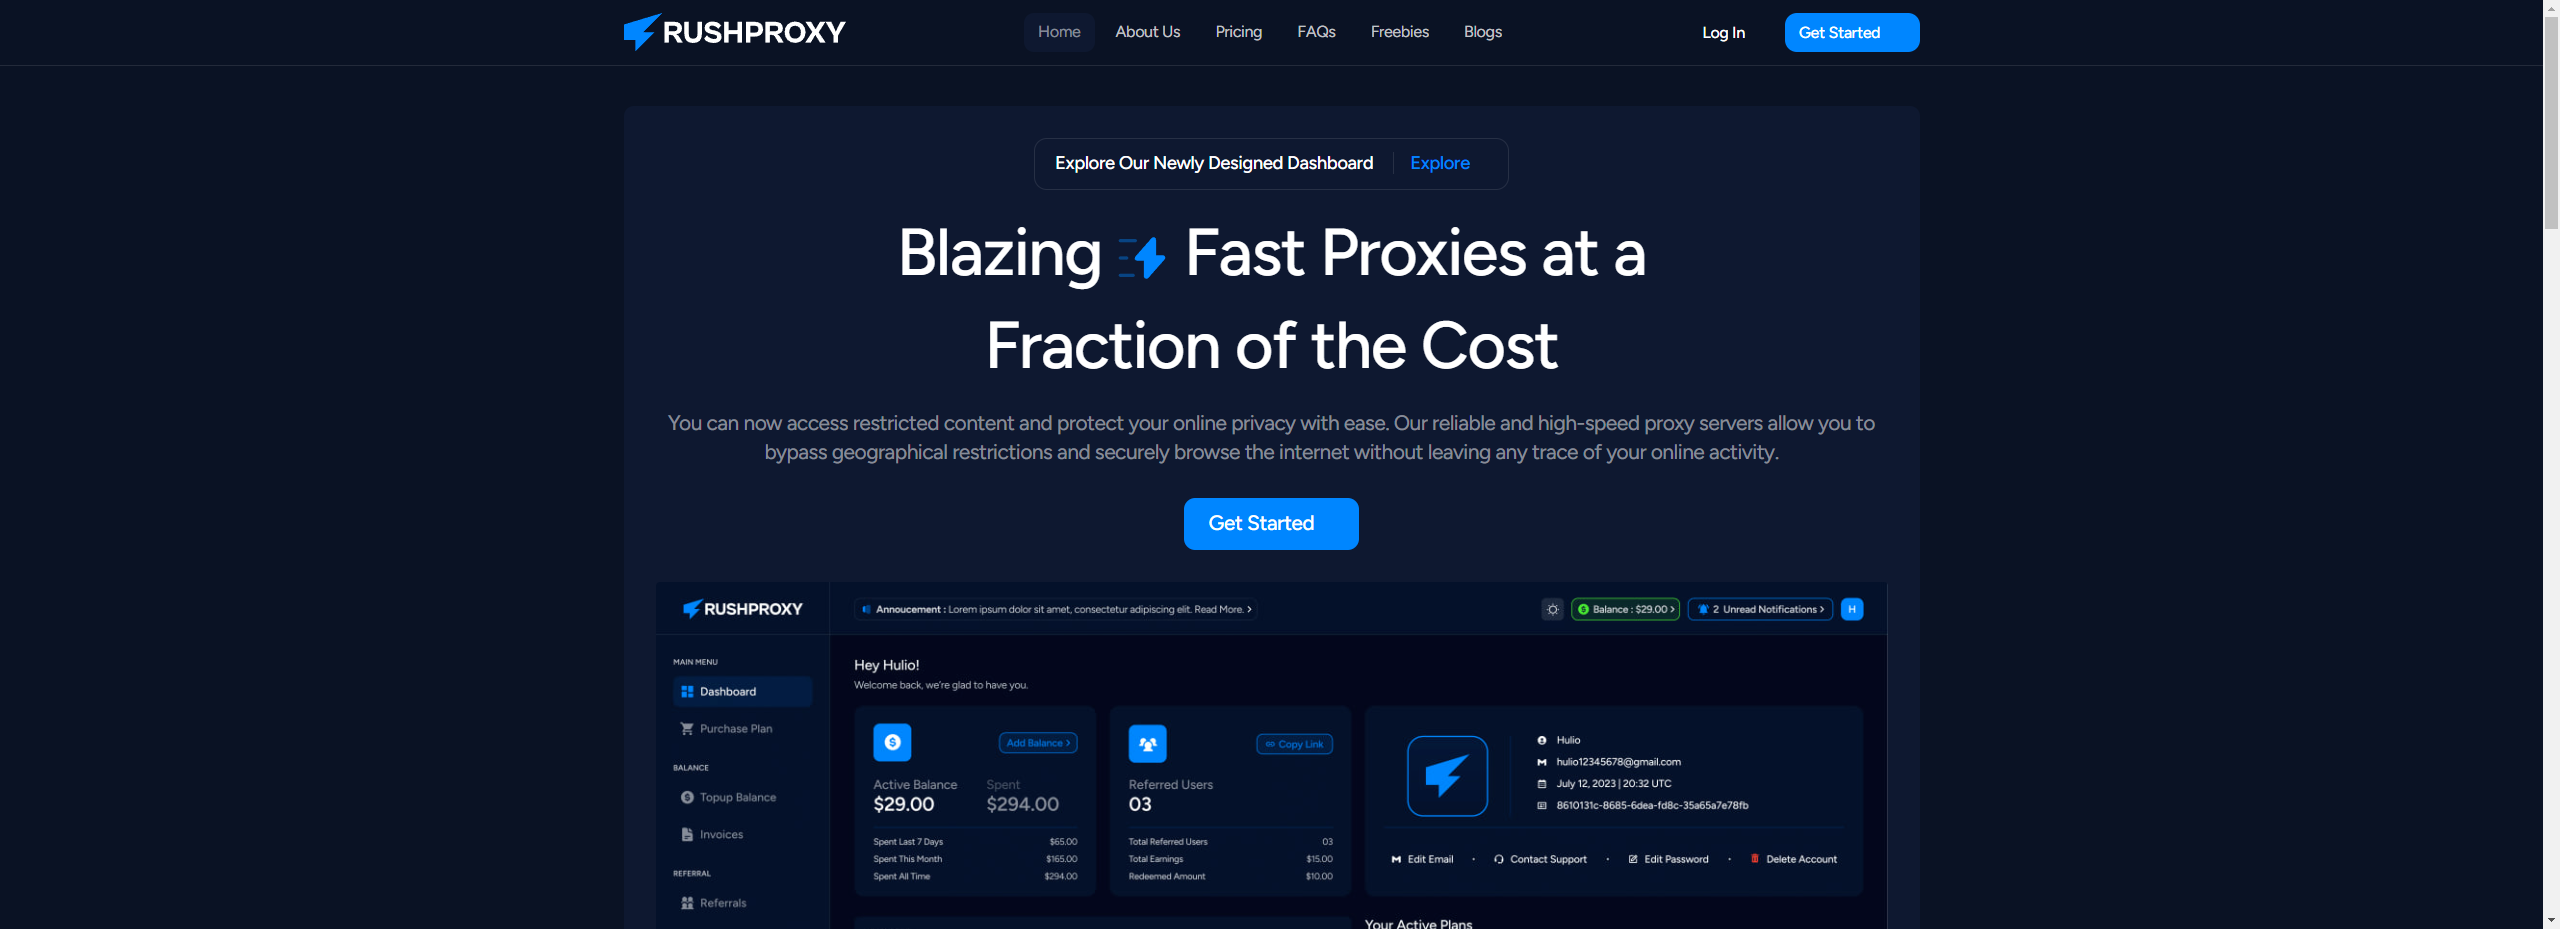 RushProxy, leading proxy provider